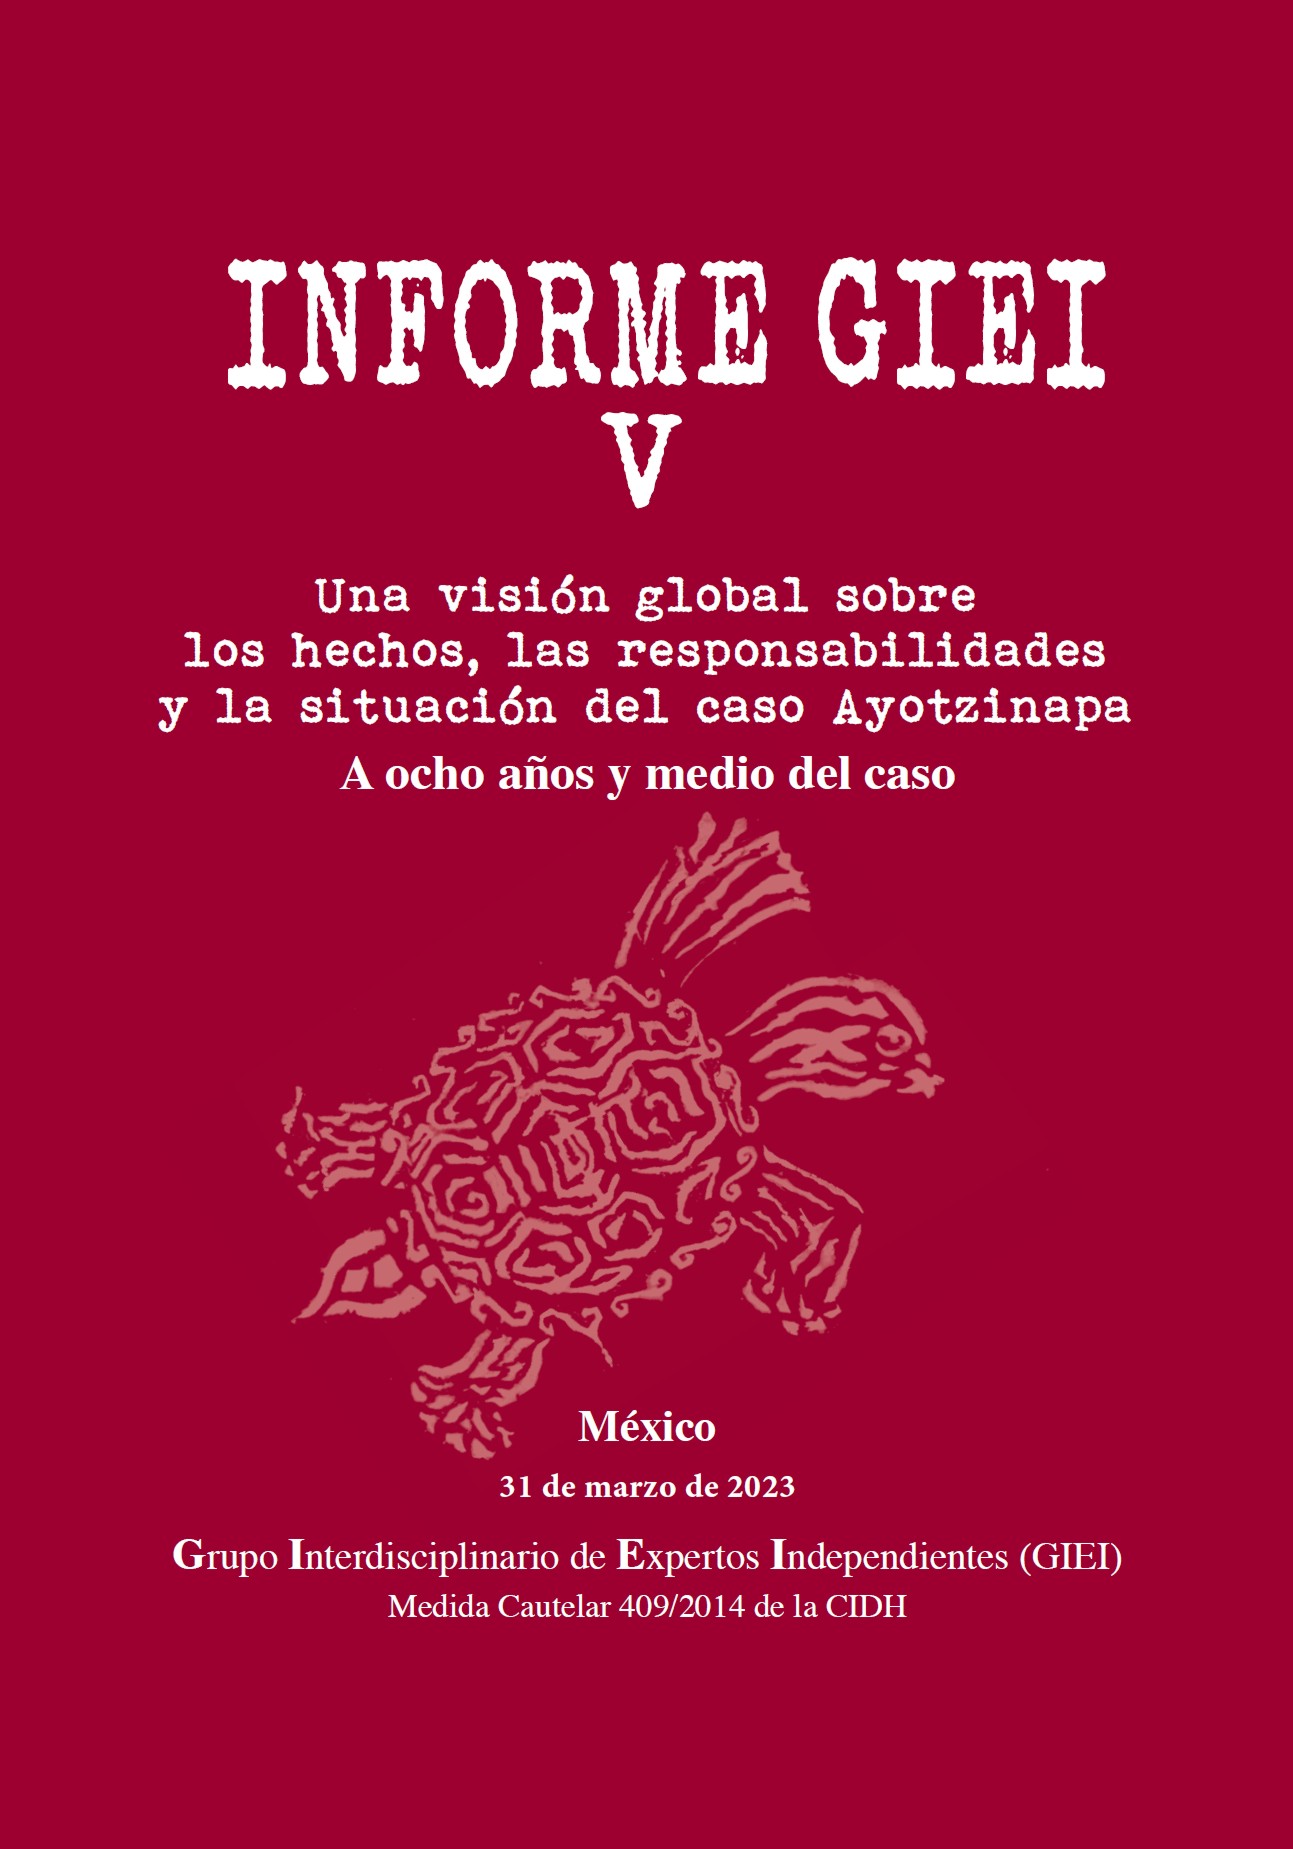 Cuarto informe Ayotzinapa SEGOB